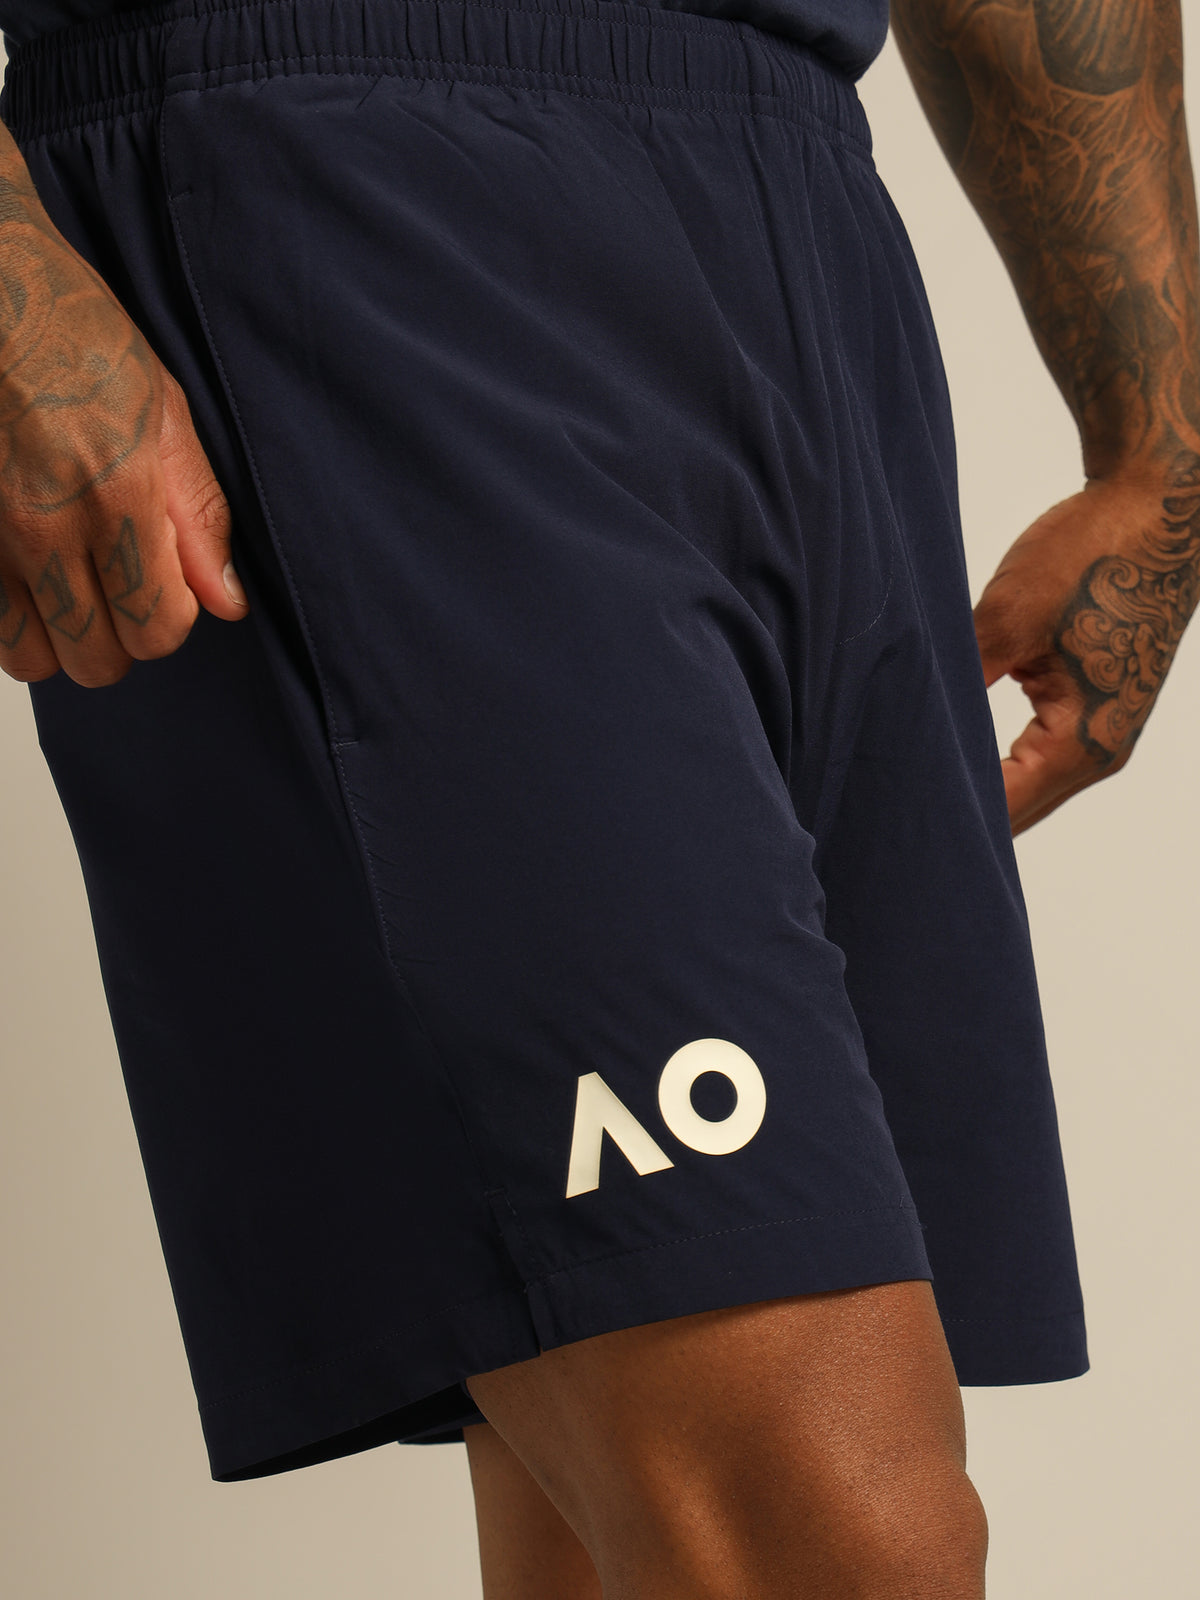 Australian Open Ballboy Shorts in Navy Blue